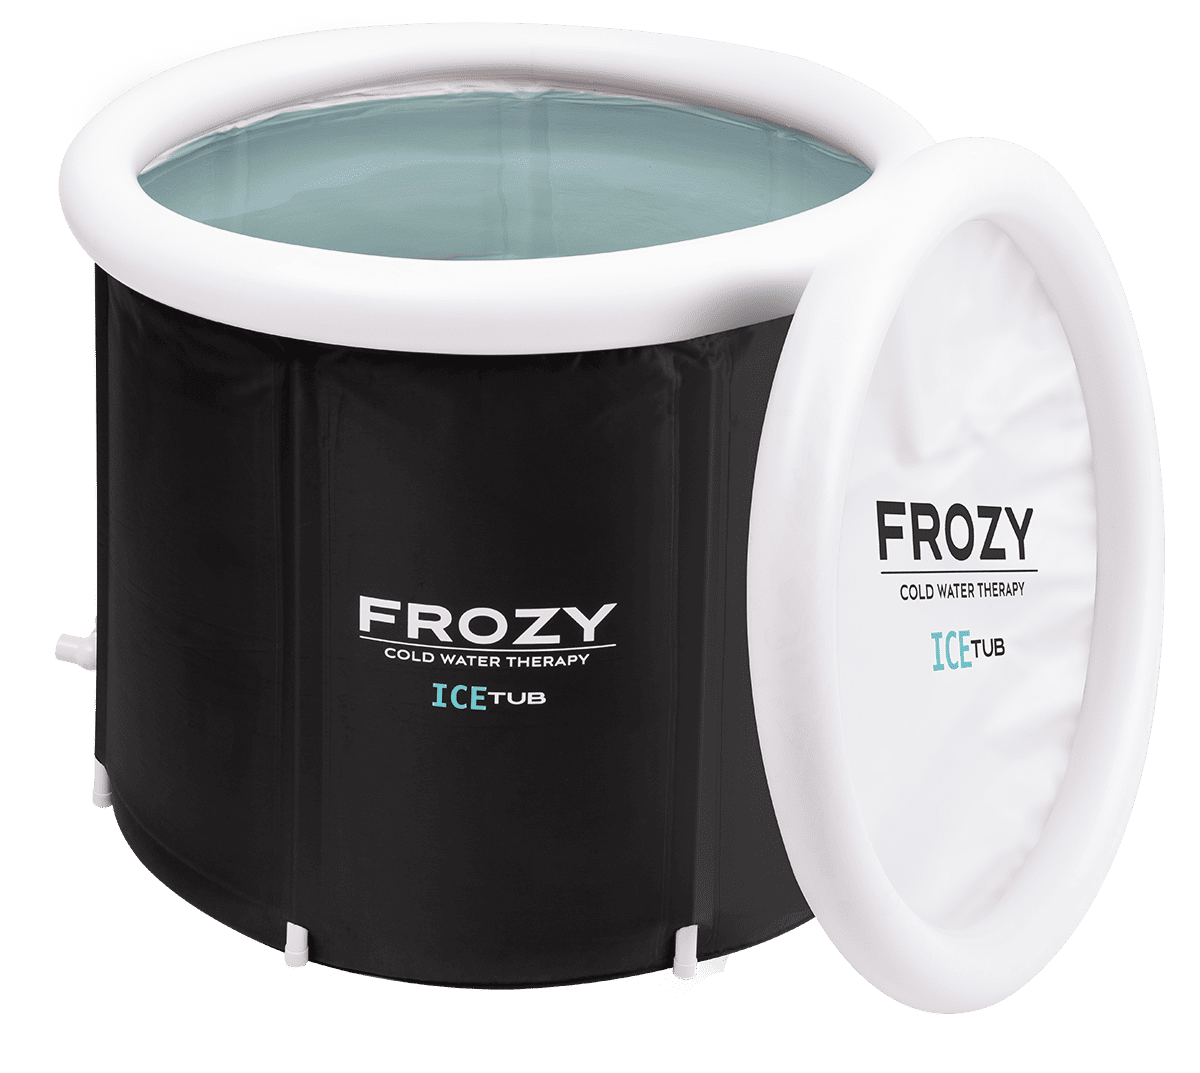 Frozy Ice Tub